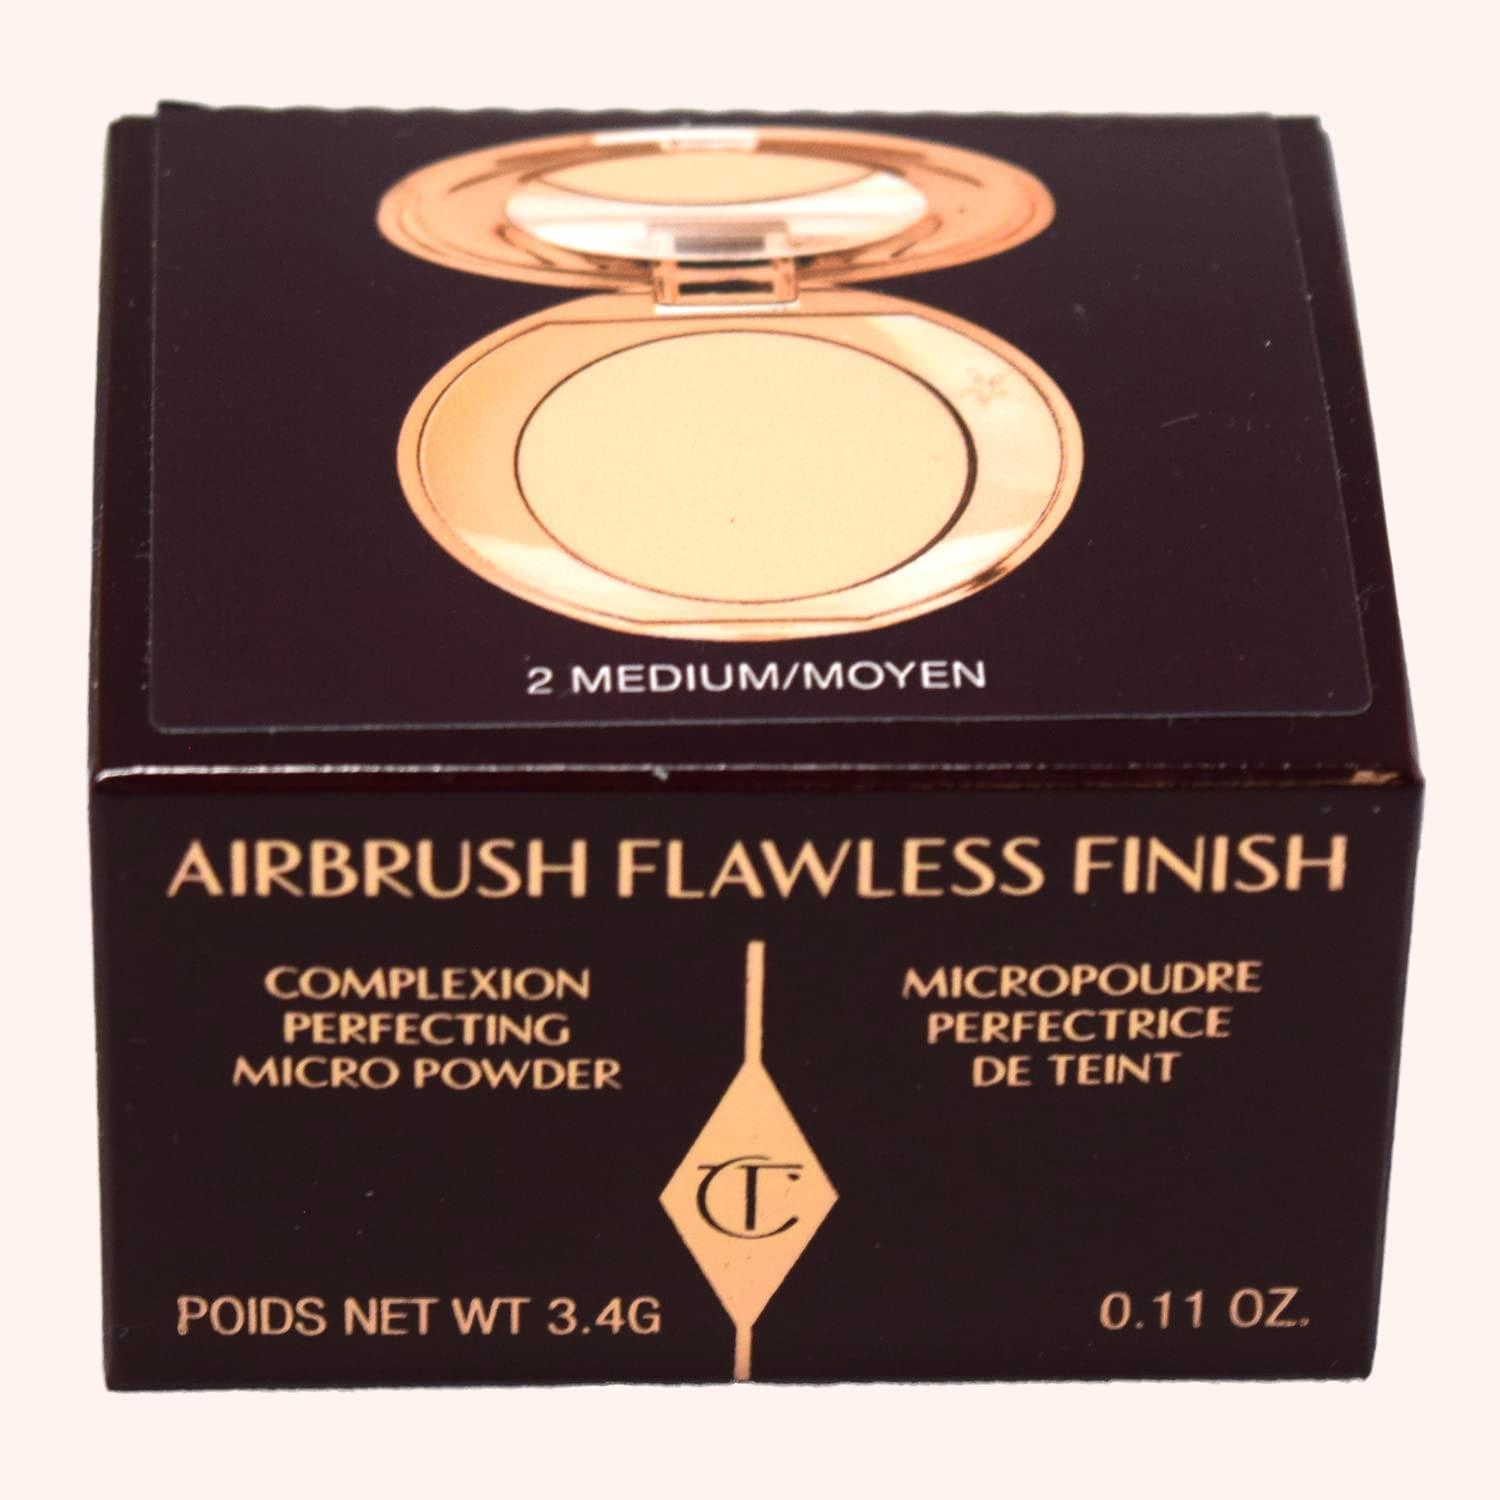 2 Medium: Airbrush Flawless Finish: Mini Powder Compact